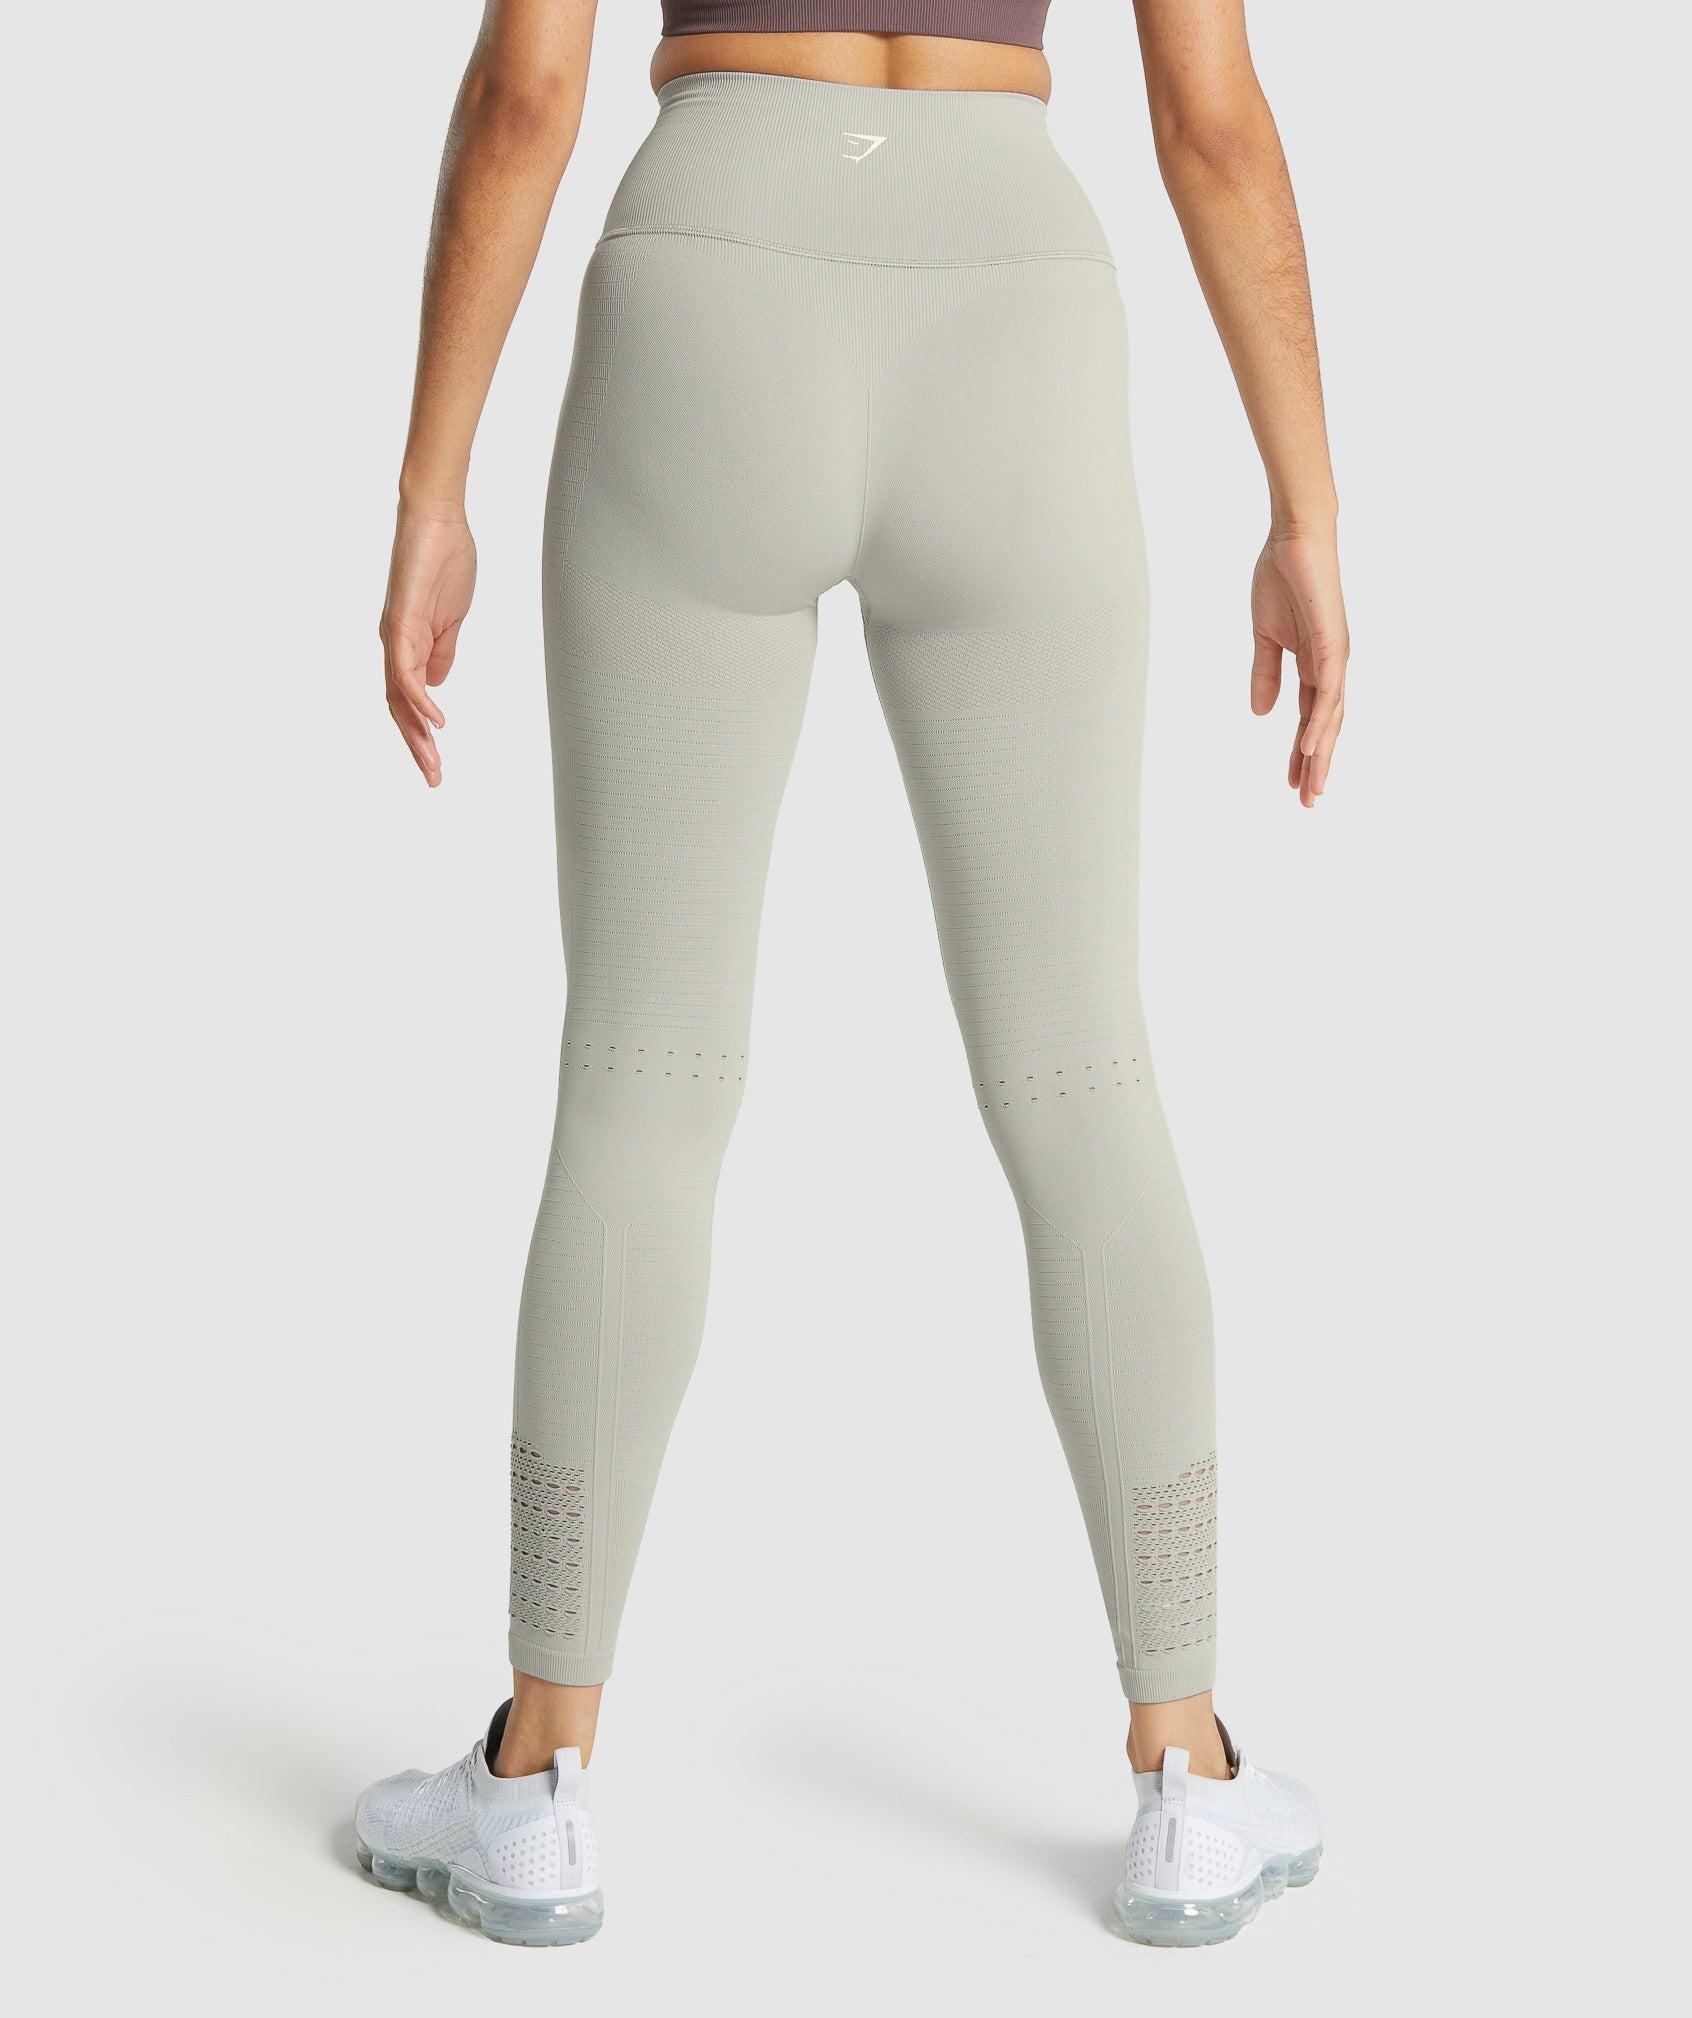 Gymshark Energy+ Seamless Leggings - Indigo  Gym clothes women, Womens  workout outfits, Seamless leggings